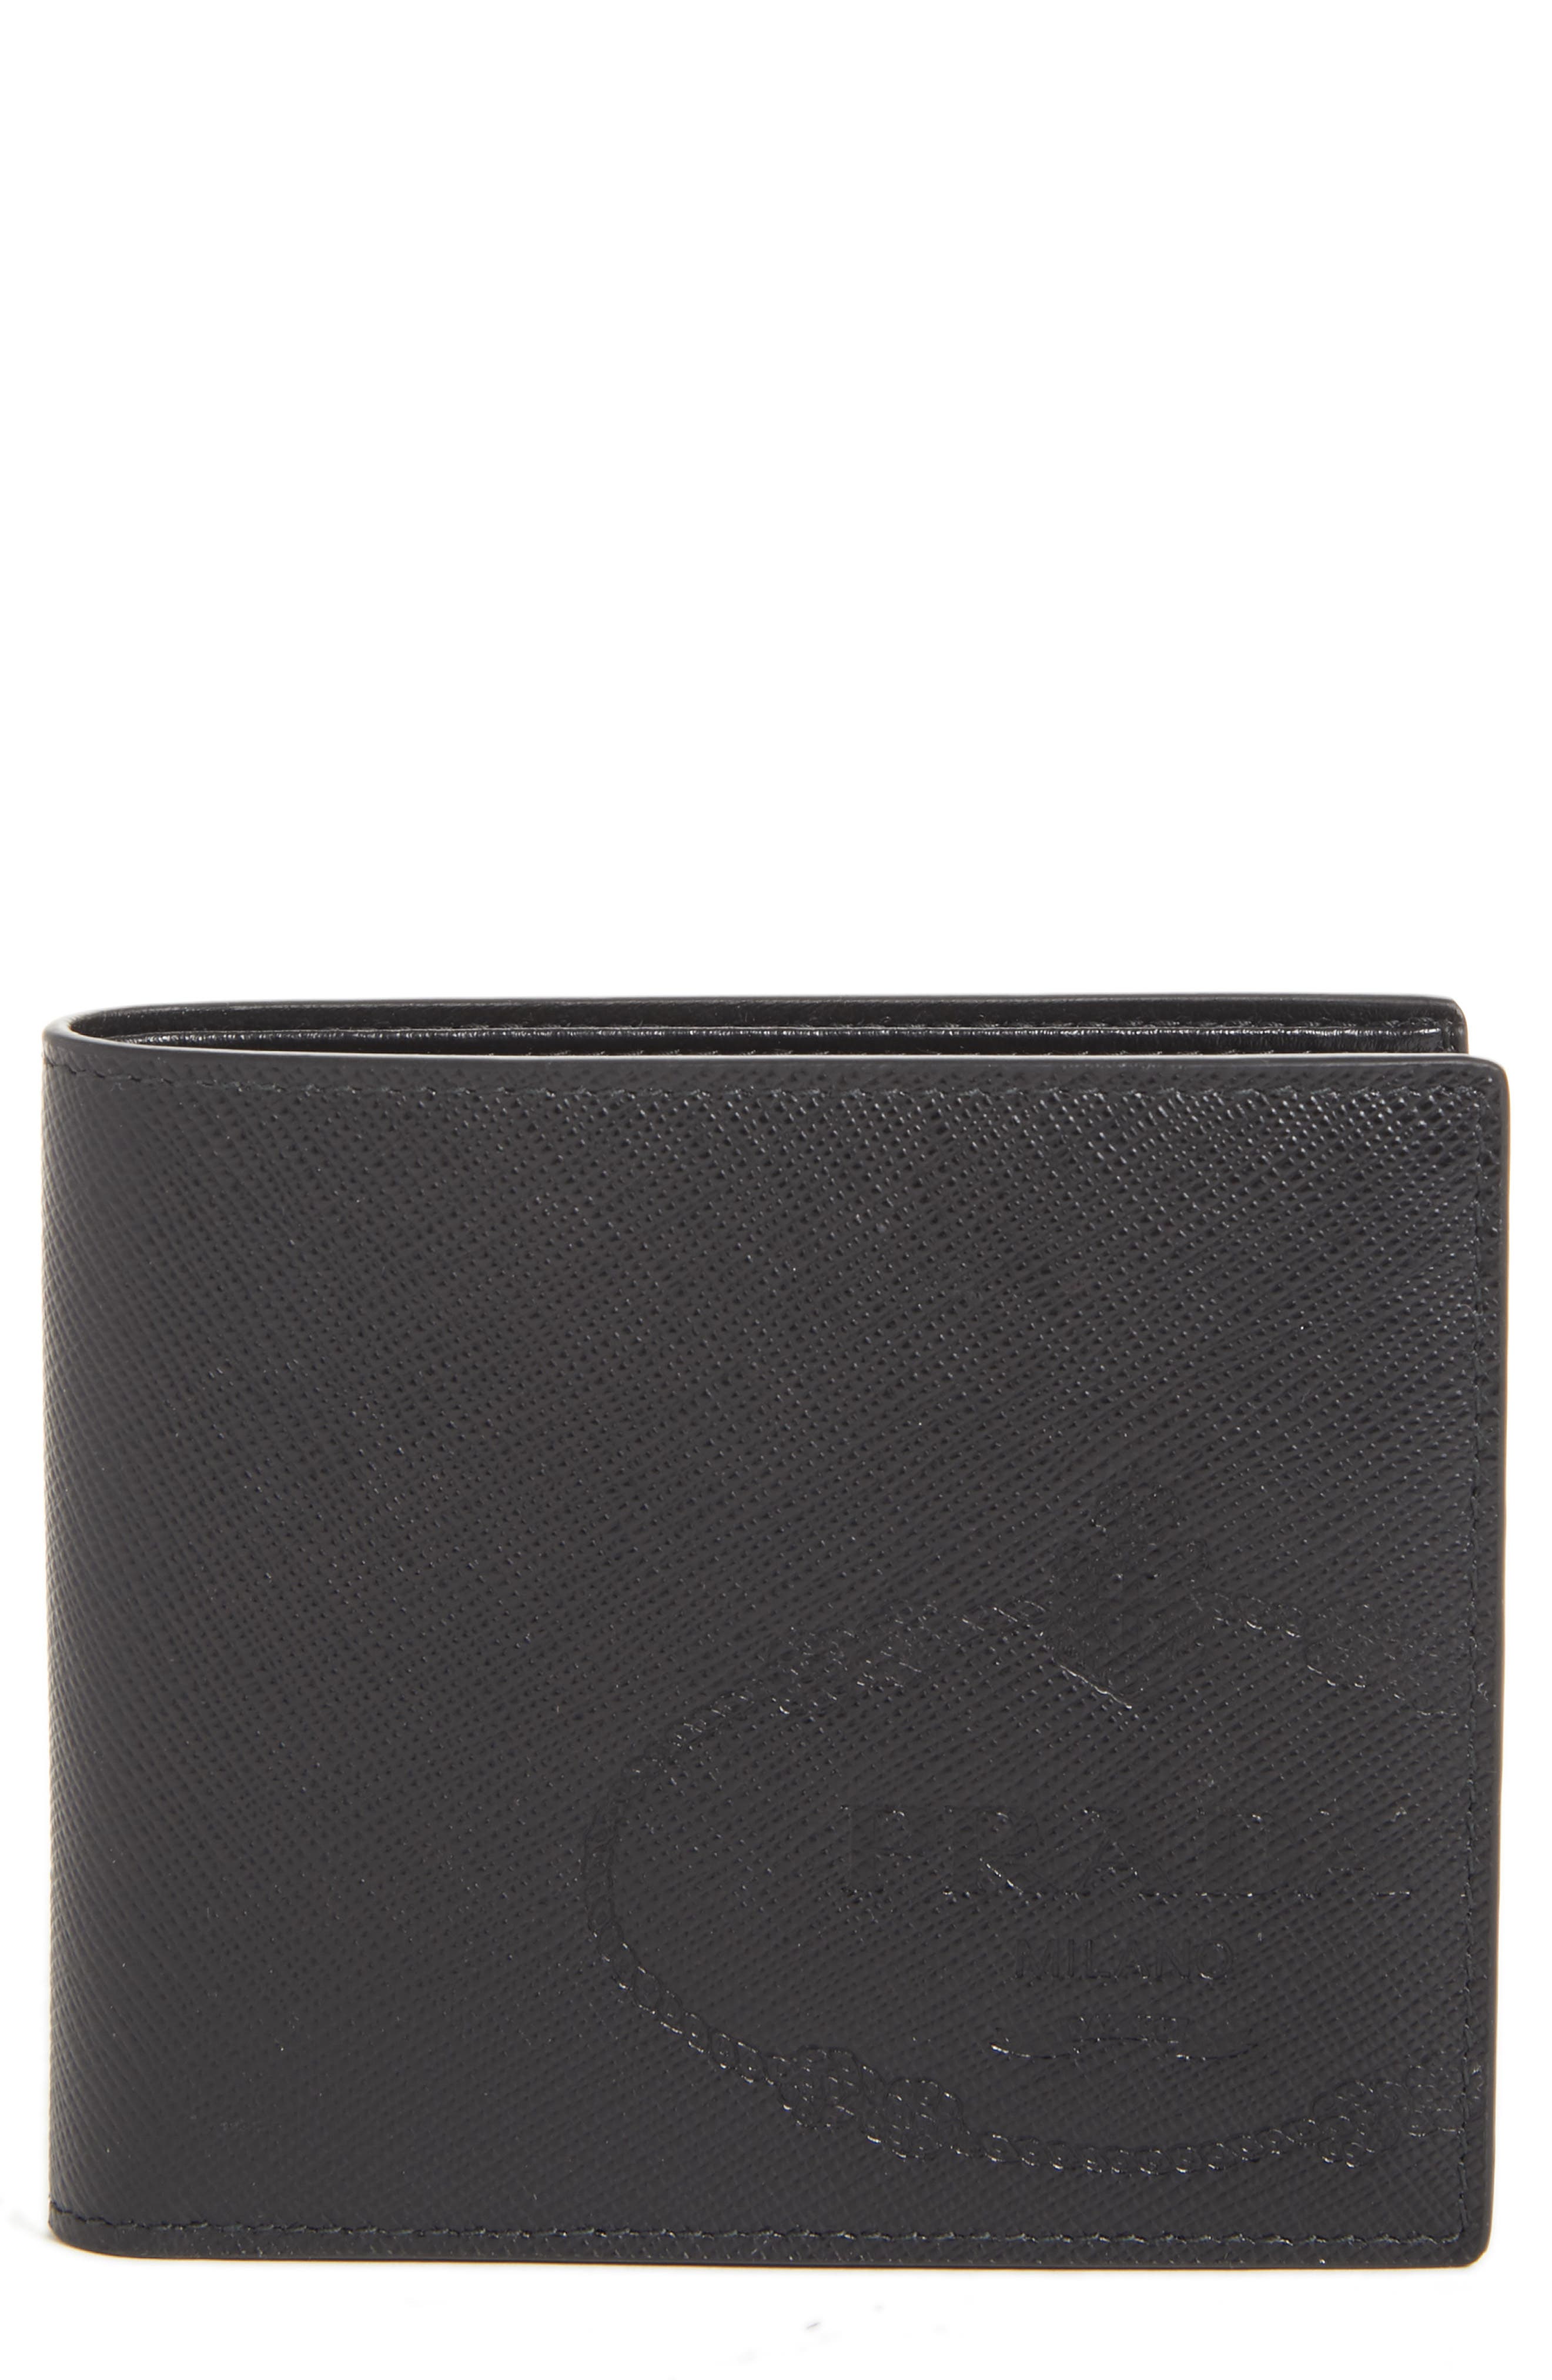 prada saffiano leather bifold wallet